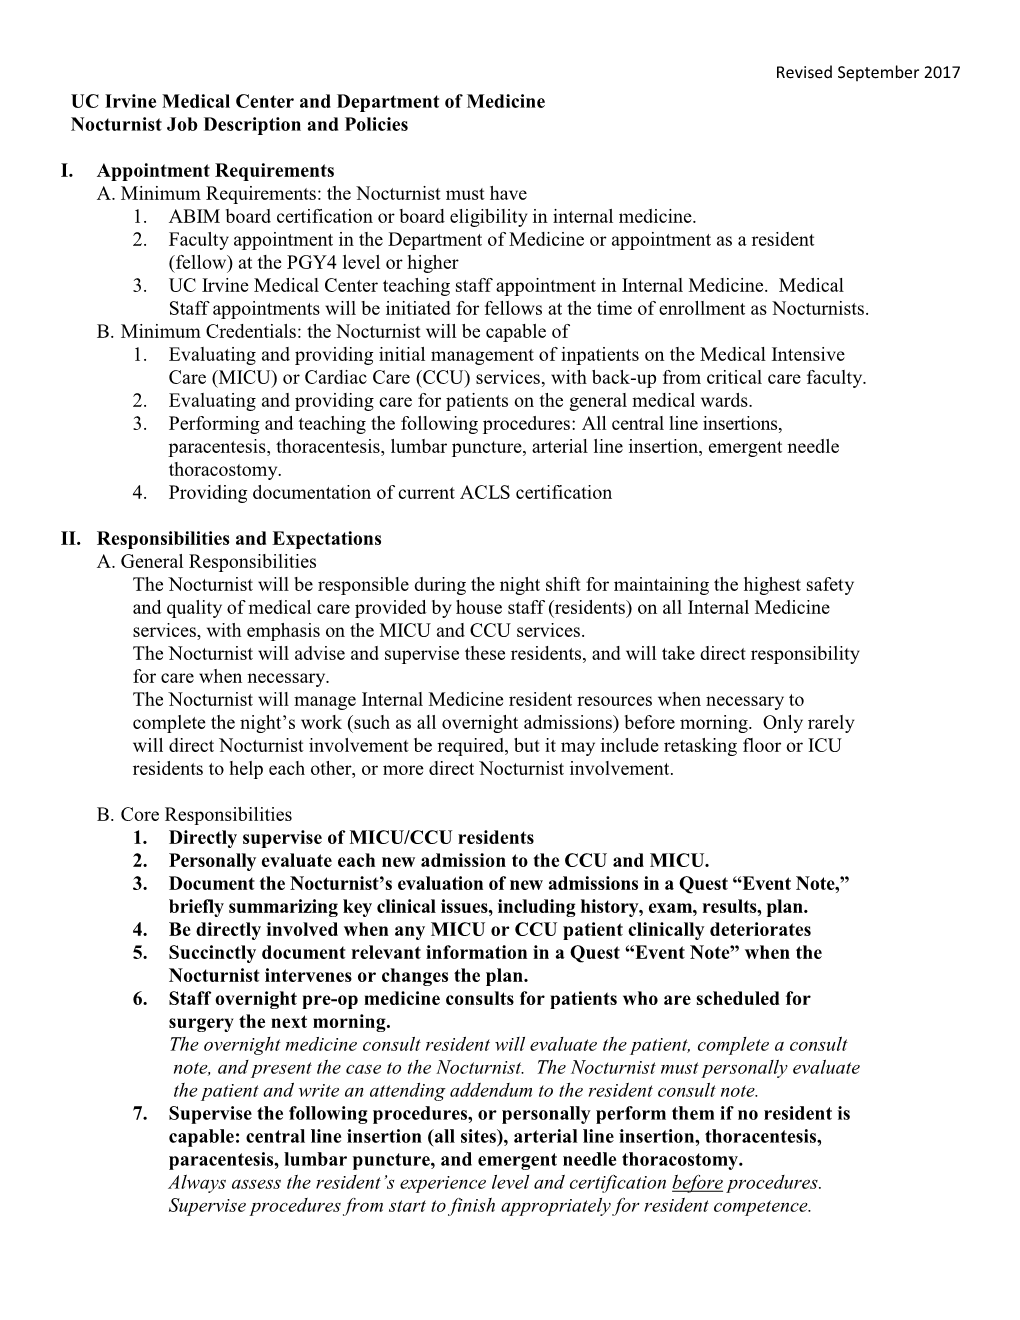 UC Irvine Medical Center and Department of Medicine Nocturnist Job Description and Policies